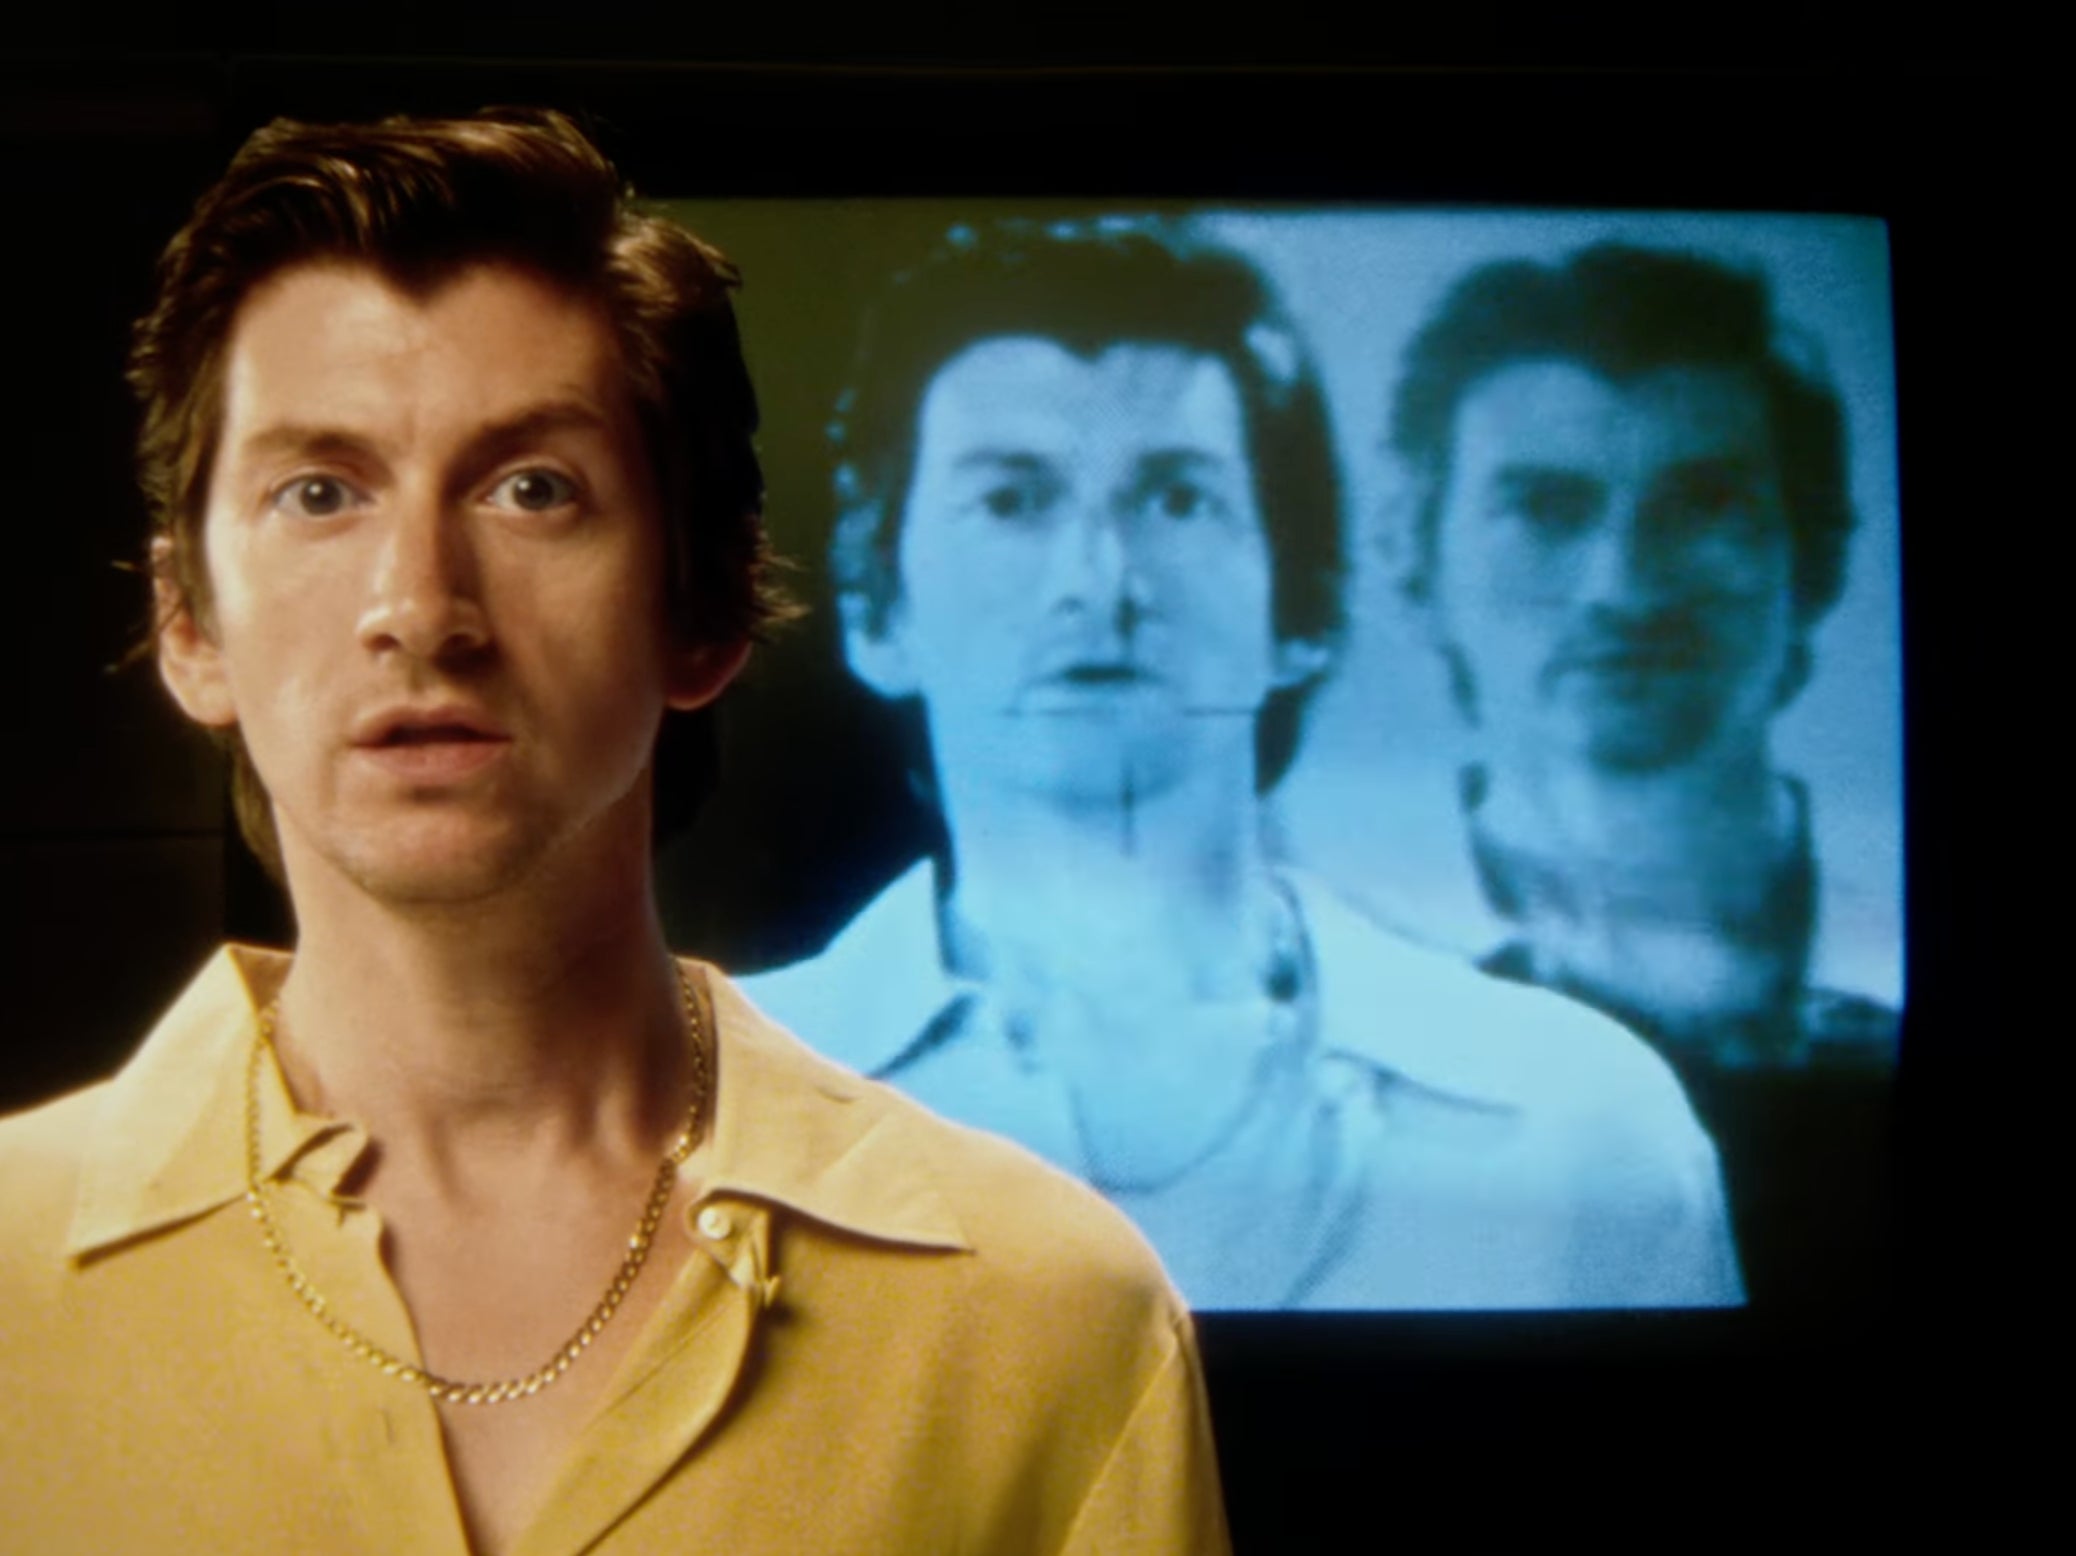 Arctic Monkeys’ Alex Turner in ‘Body Paint’ music video